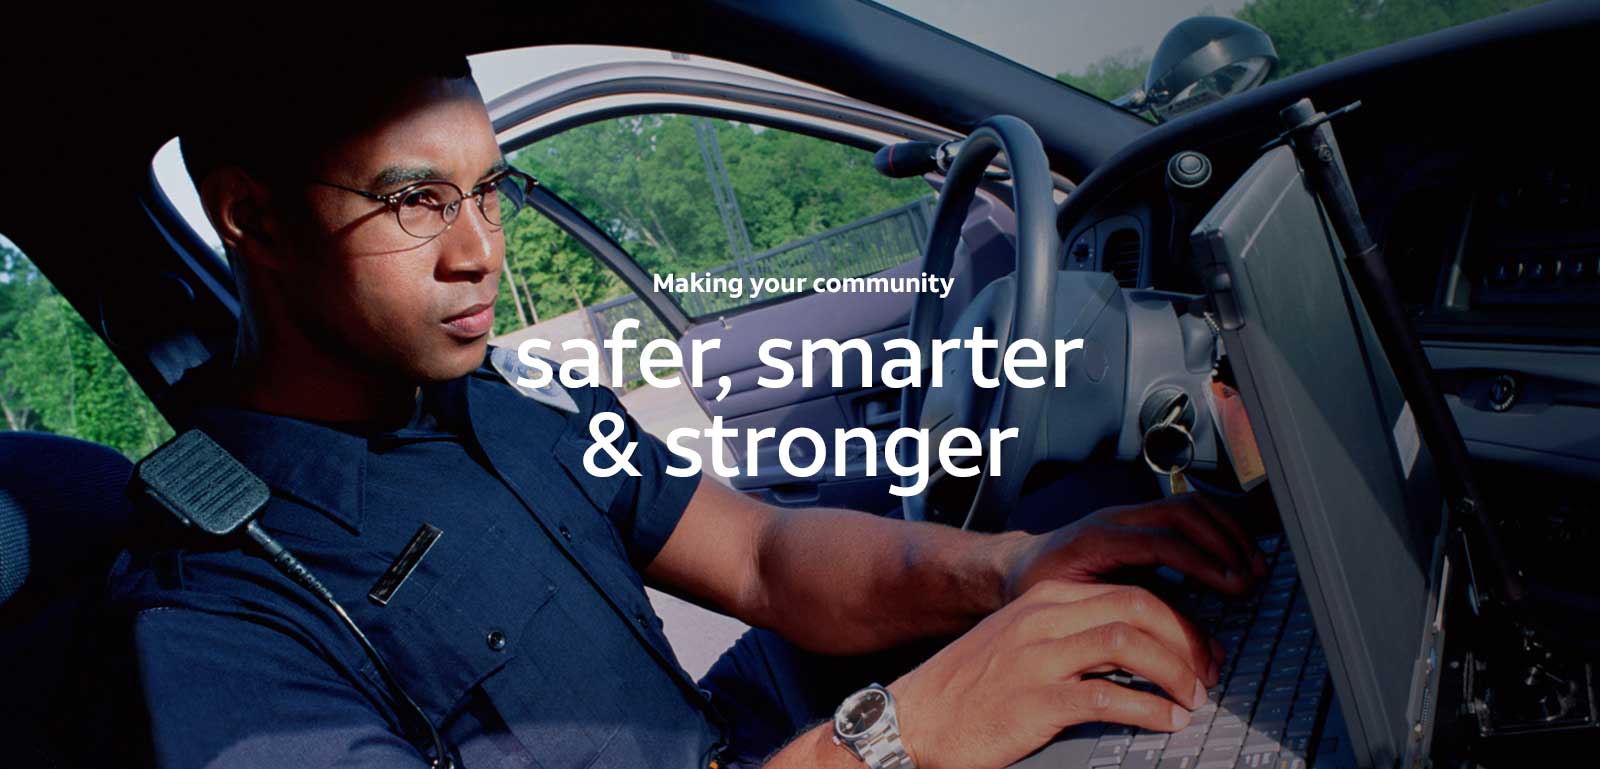 Making your community safer, smarter & stronger